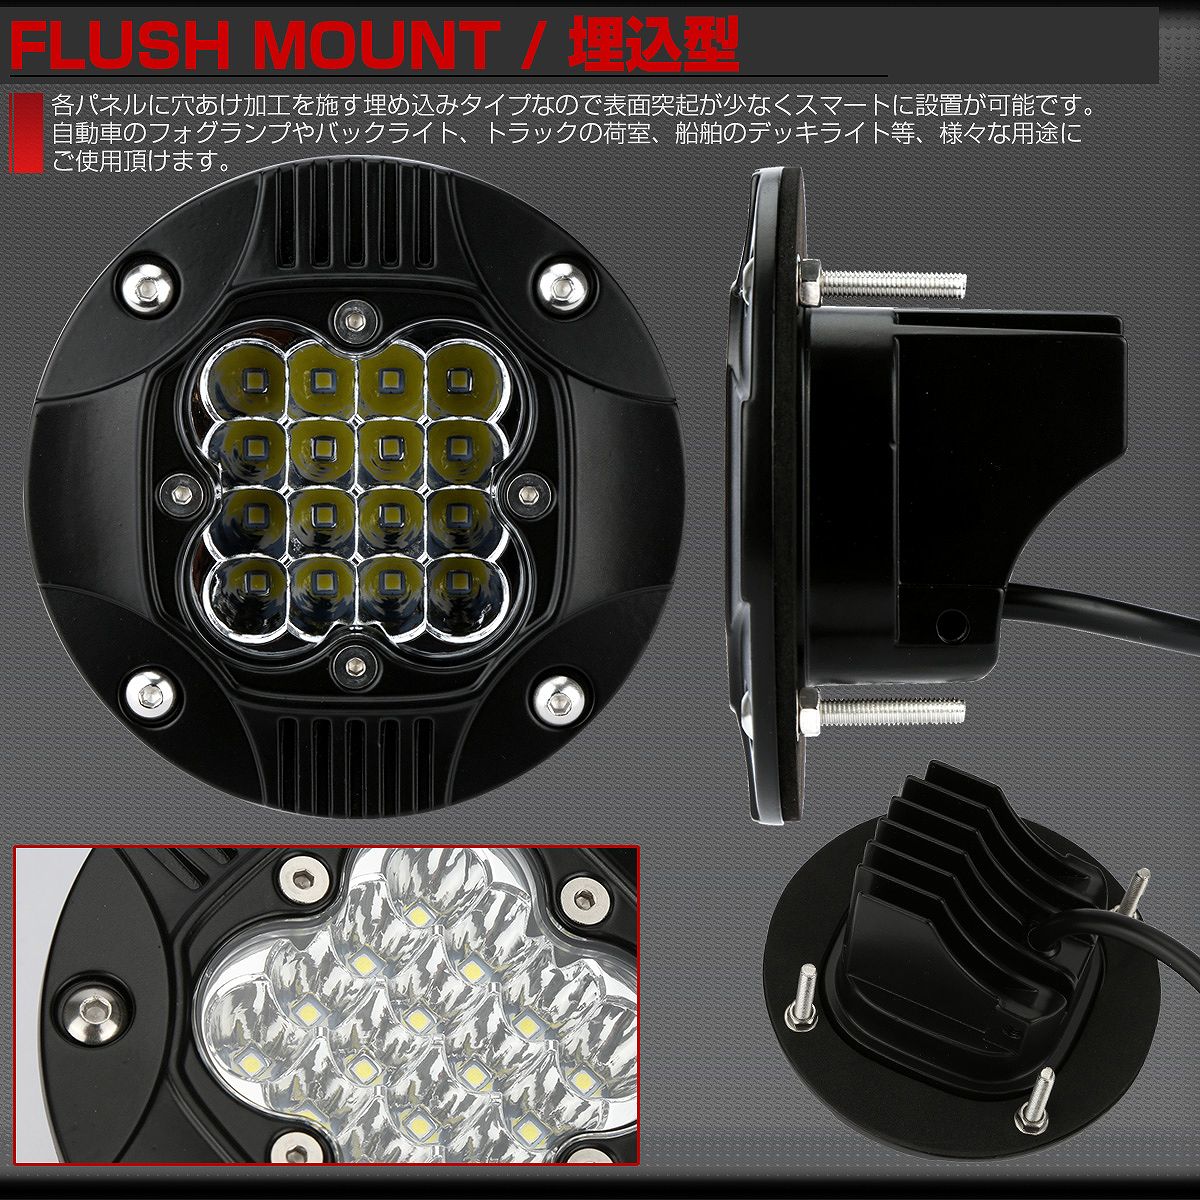 LED 作業灯 丸型 スポットライト 48W フォグランプ バックランプ 補助灯に フラッシュマウント型 12V/24V 防水IP67 P-538